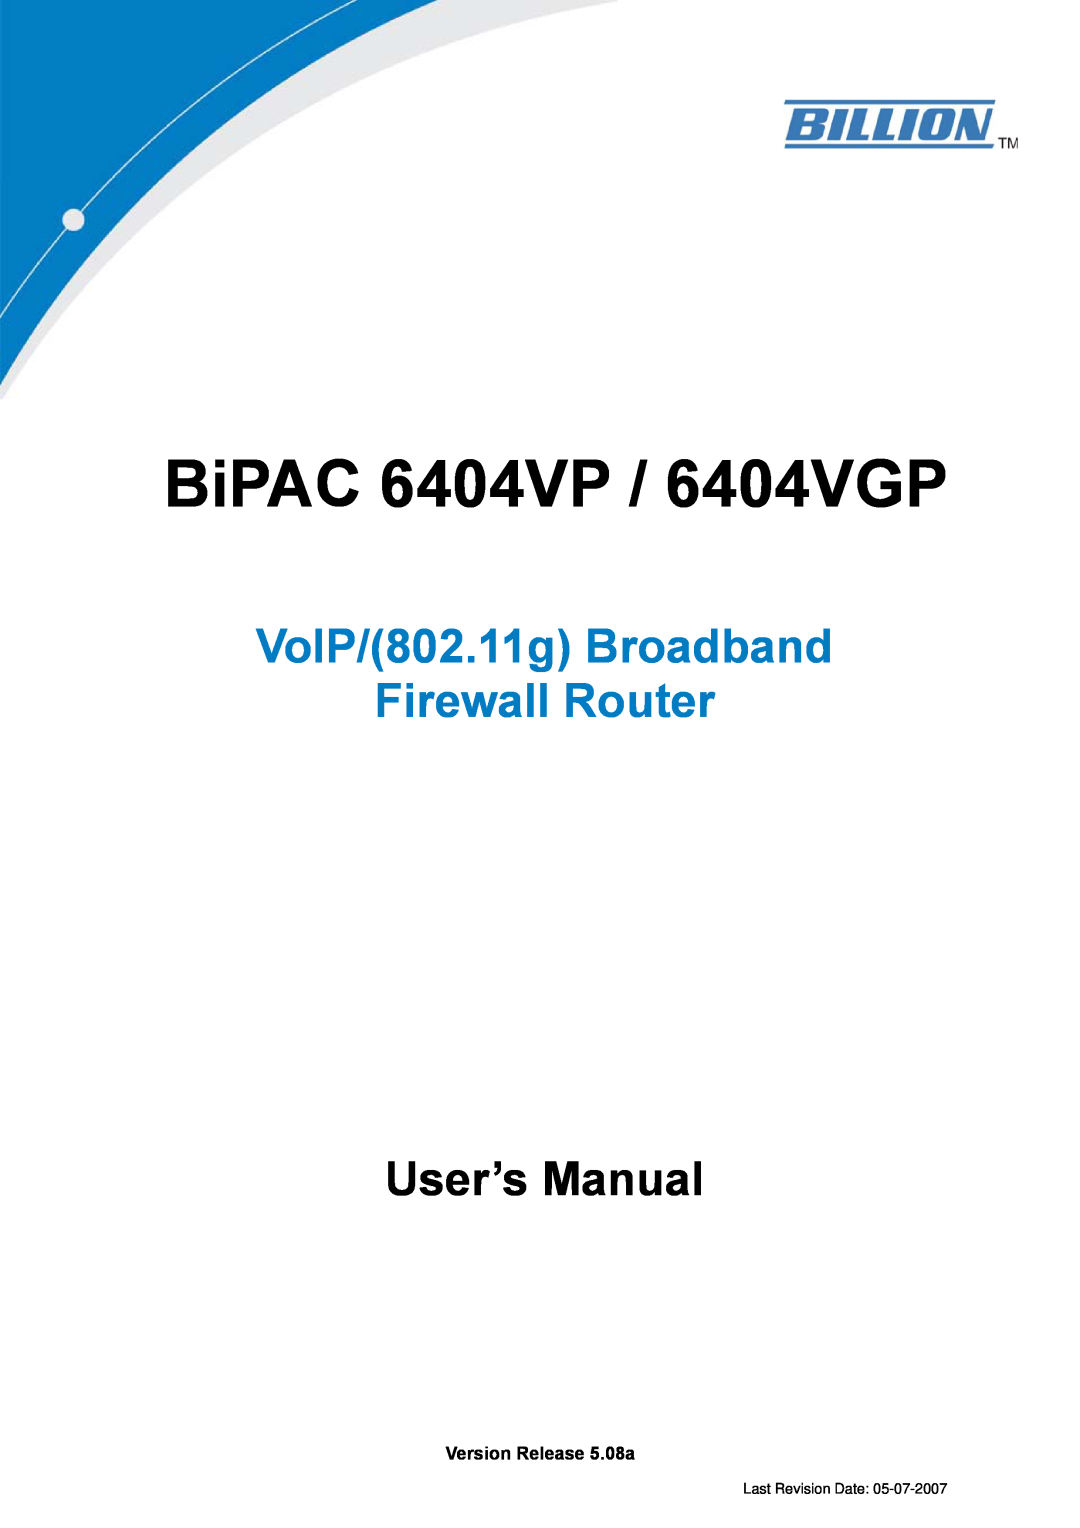 Billion Electric Company user manual BiPAC 6404VP / 6404VGP, VoIP/802.11g Broadband Firewall Router, User’s Manual 